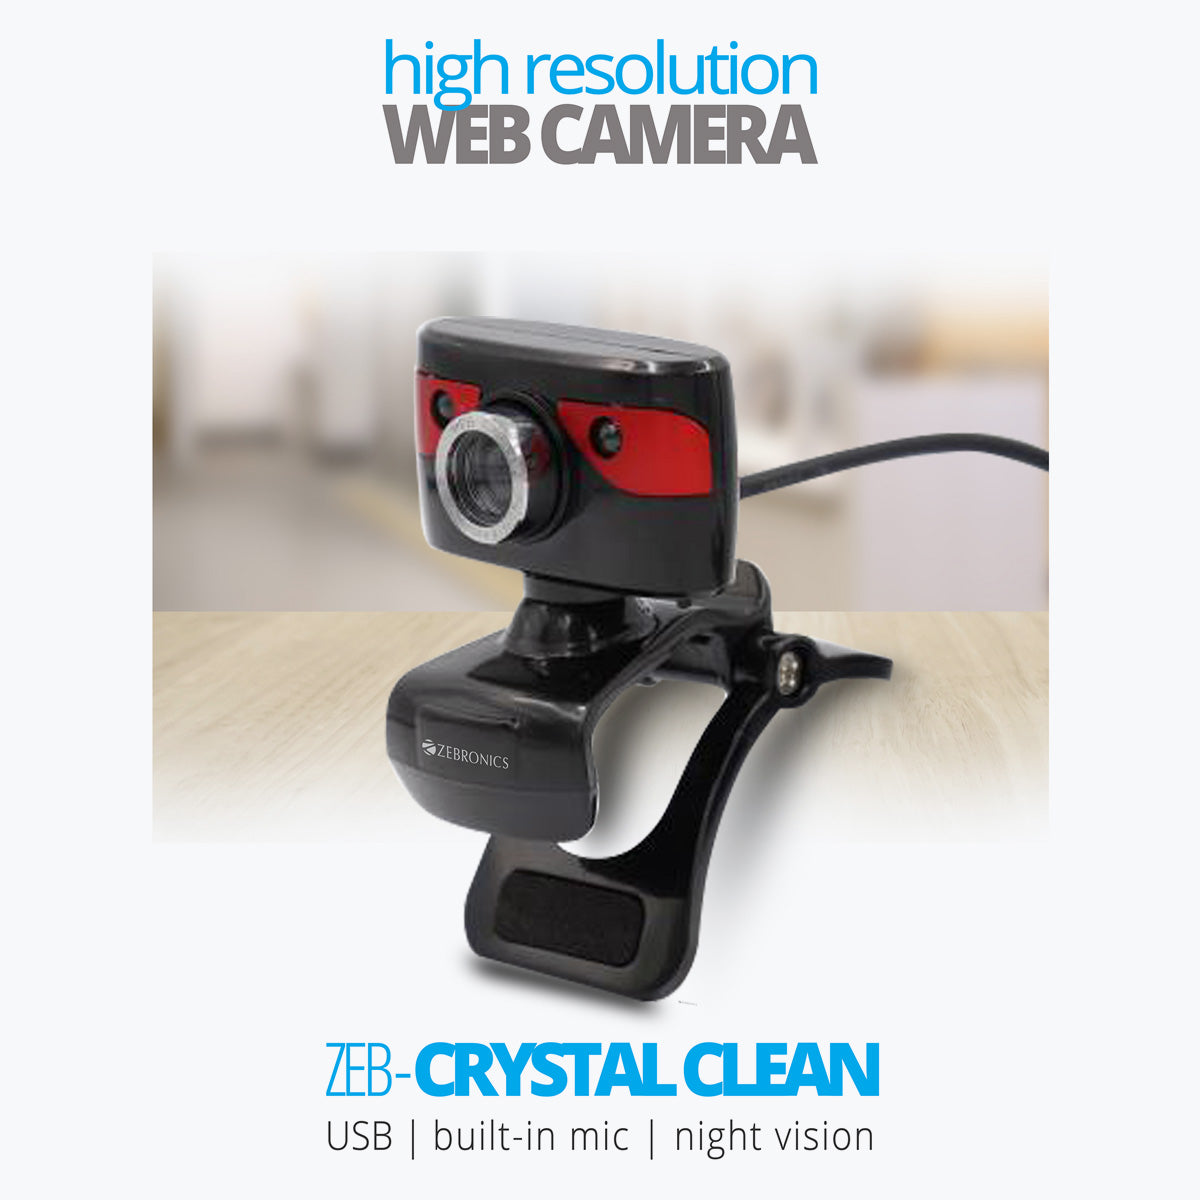 Zeb-Crystal Clean - Webcamera - Zebronics